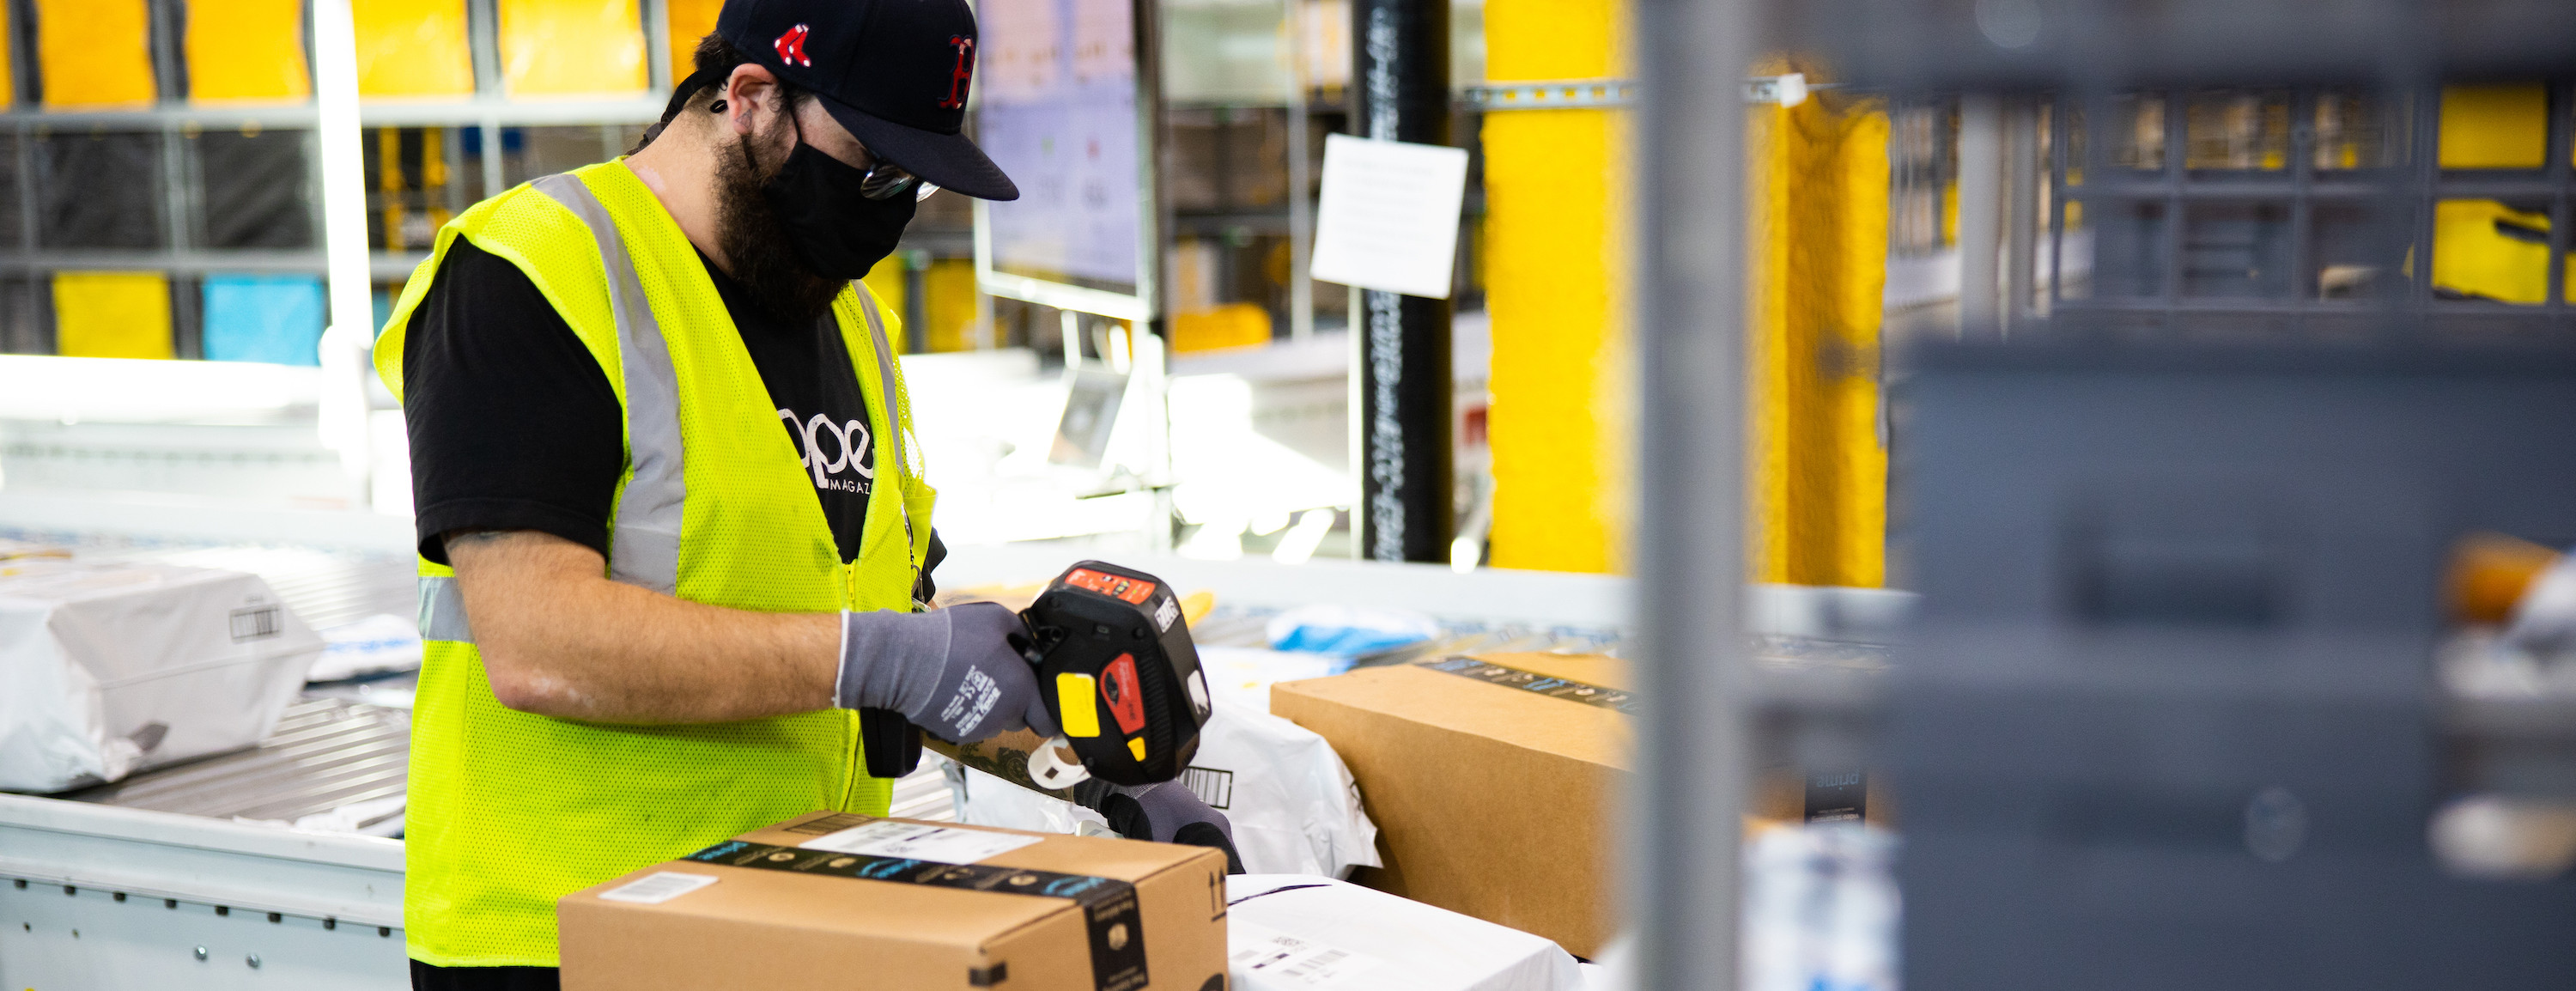 Amazon employee wrapping boxes on a conveyor belt